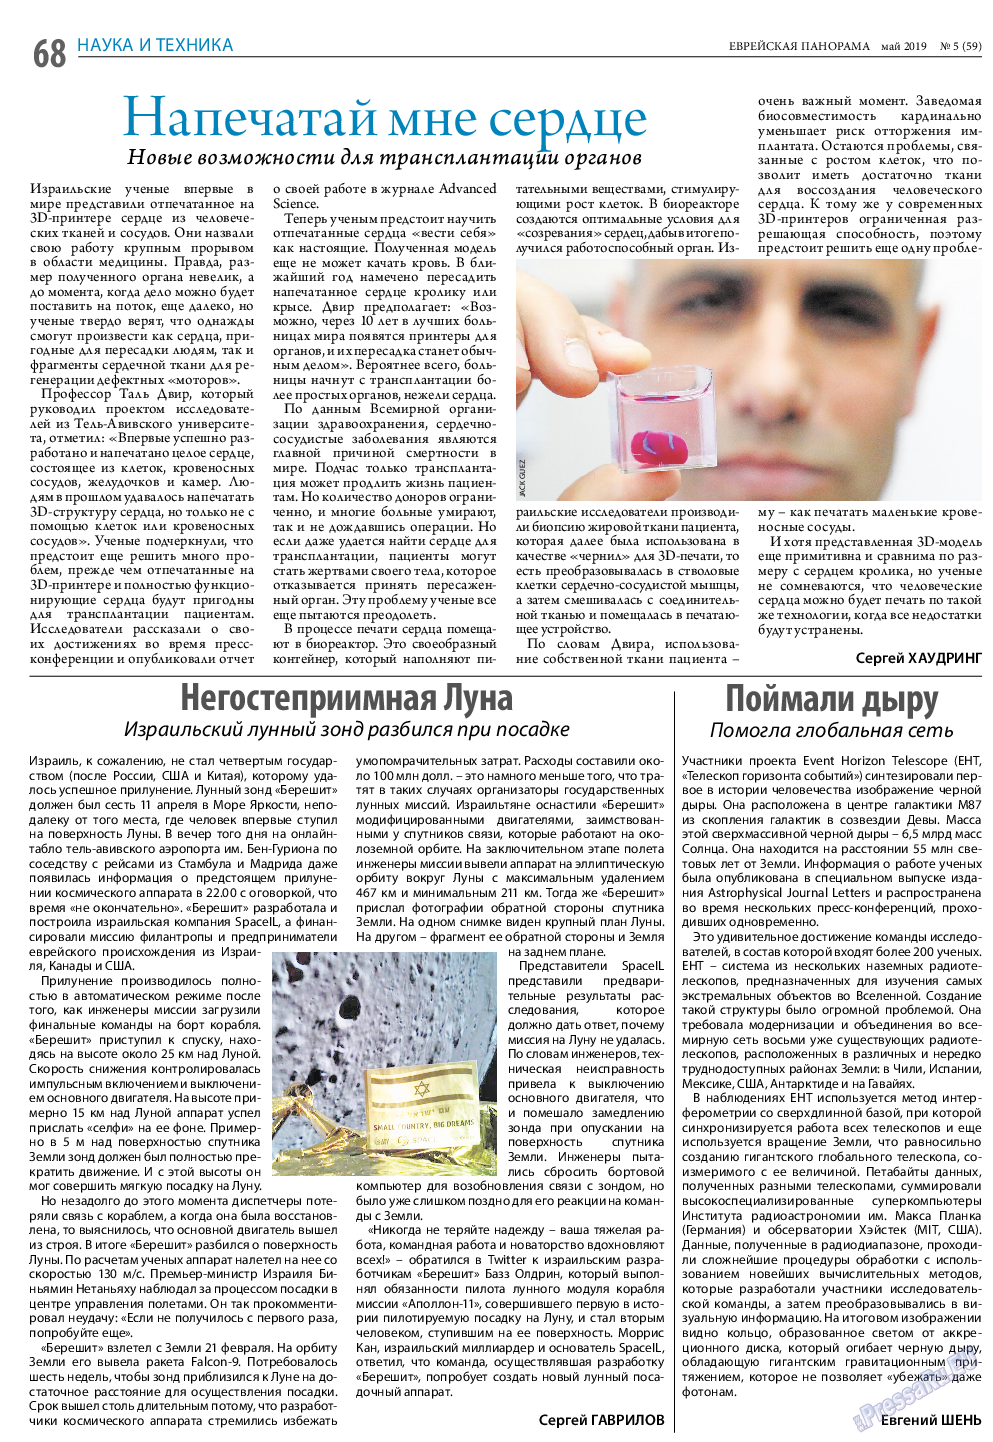 Еврейская панорама, газета. 2019 №5 стр.68